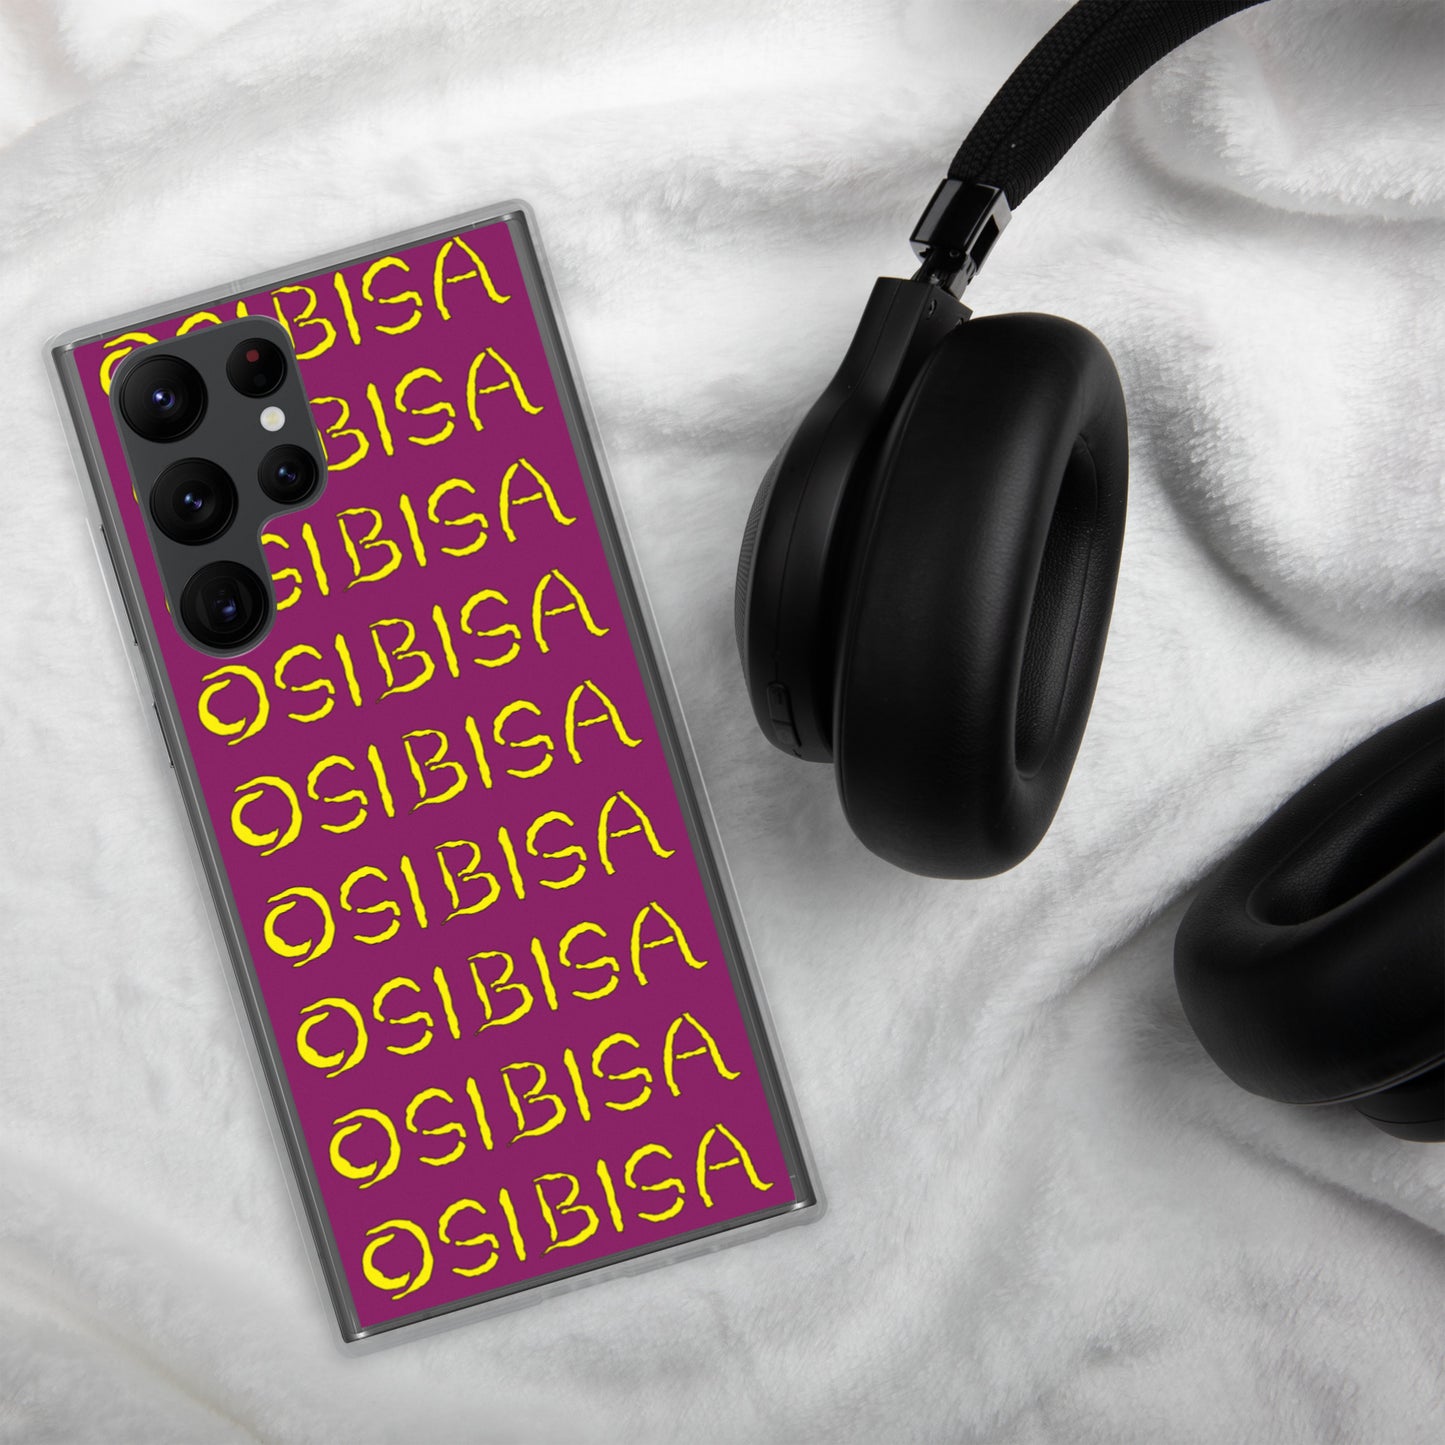 Osibisa Purple Samsung Case